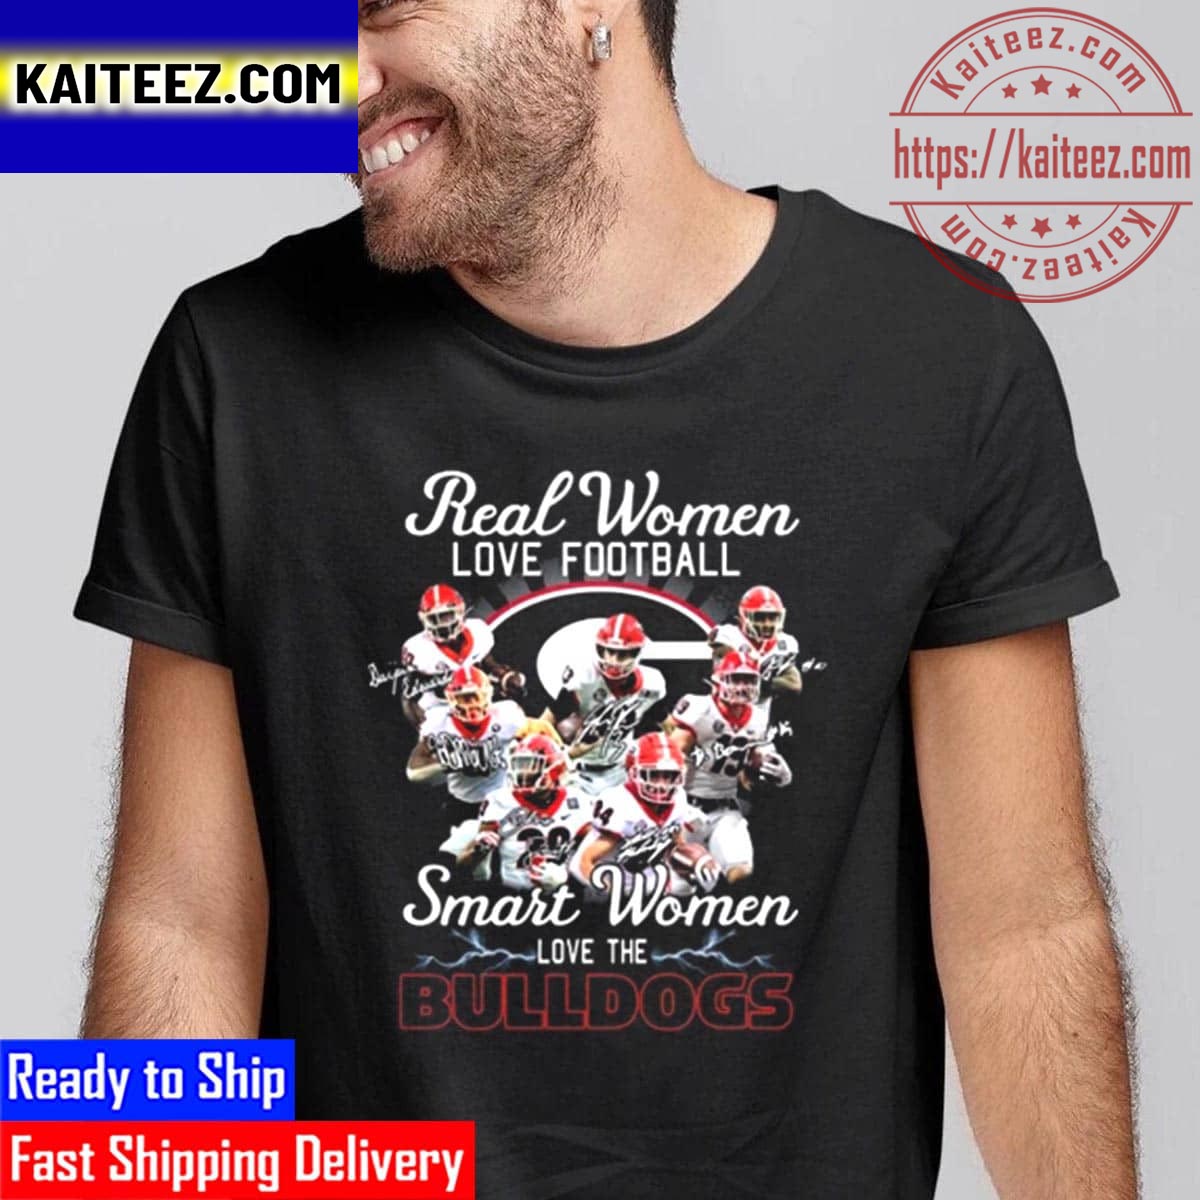 Real Women Love Football Smart Women Love The Oregon Ducks T Shirt - Growkoc